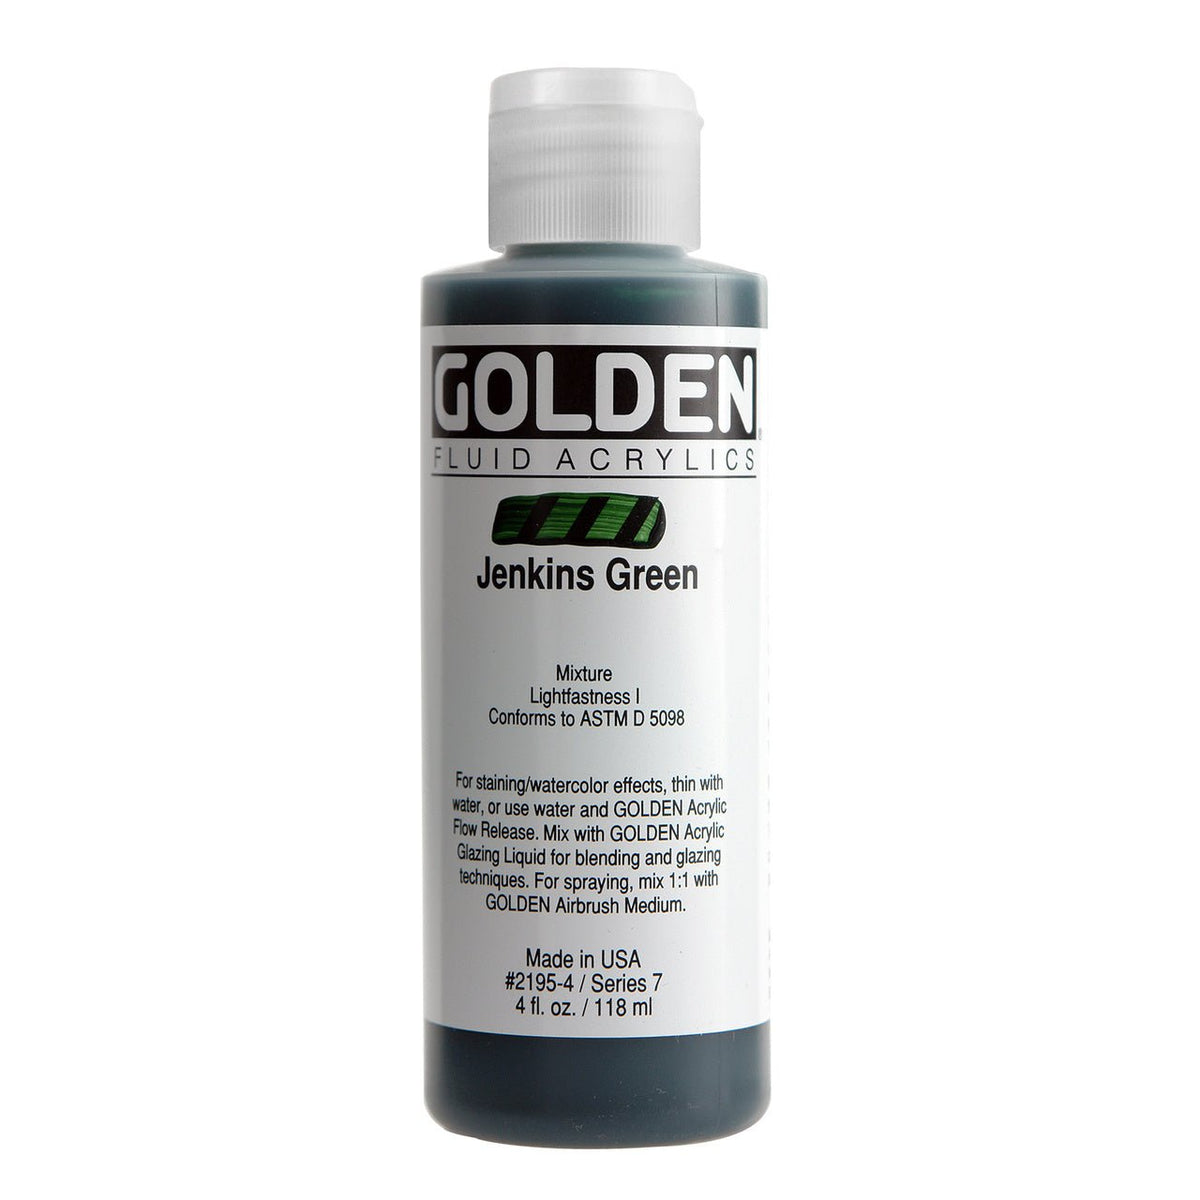 Golden Fluid Acrylic Jenkins Green 4 oz - merriartist.com